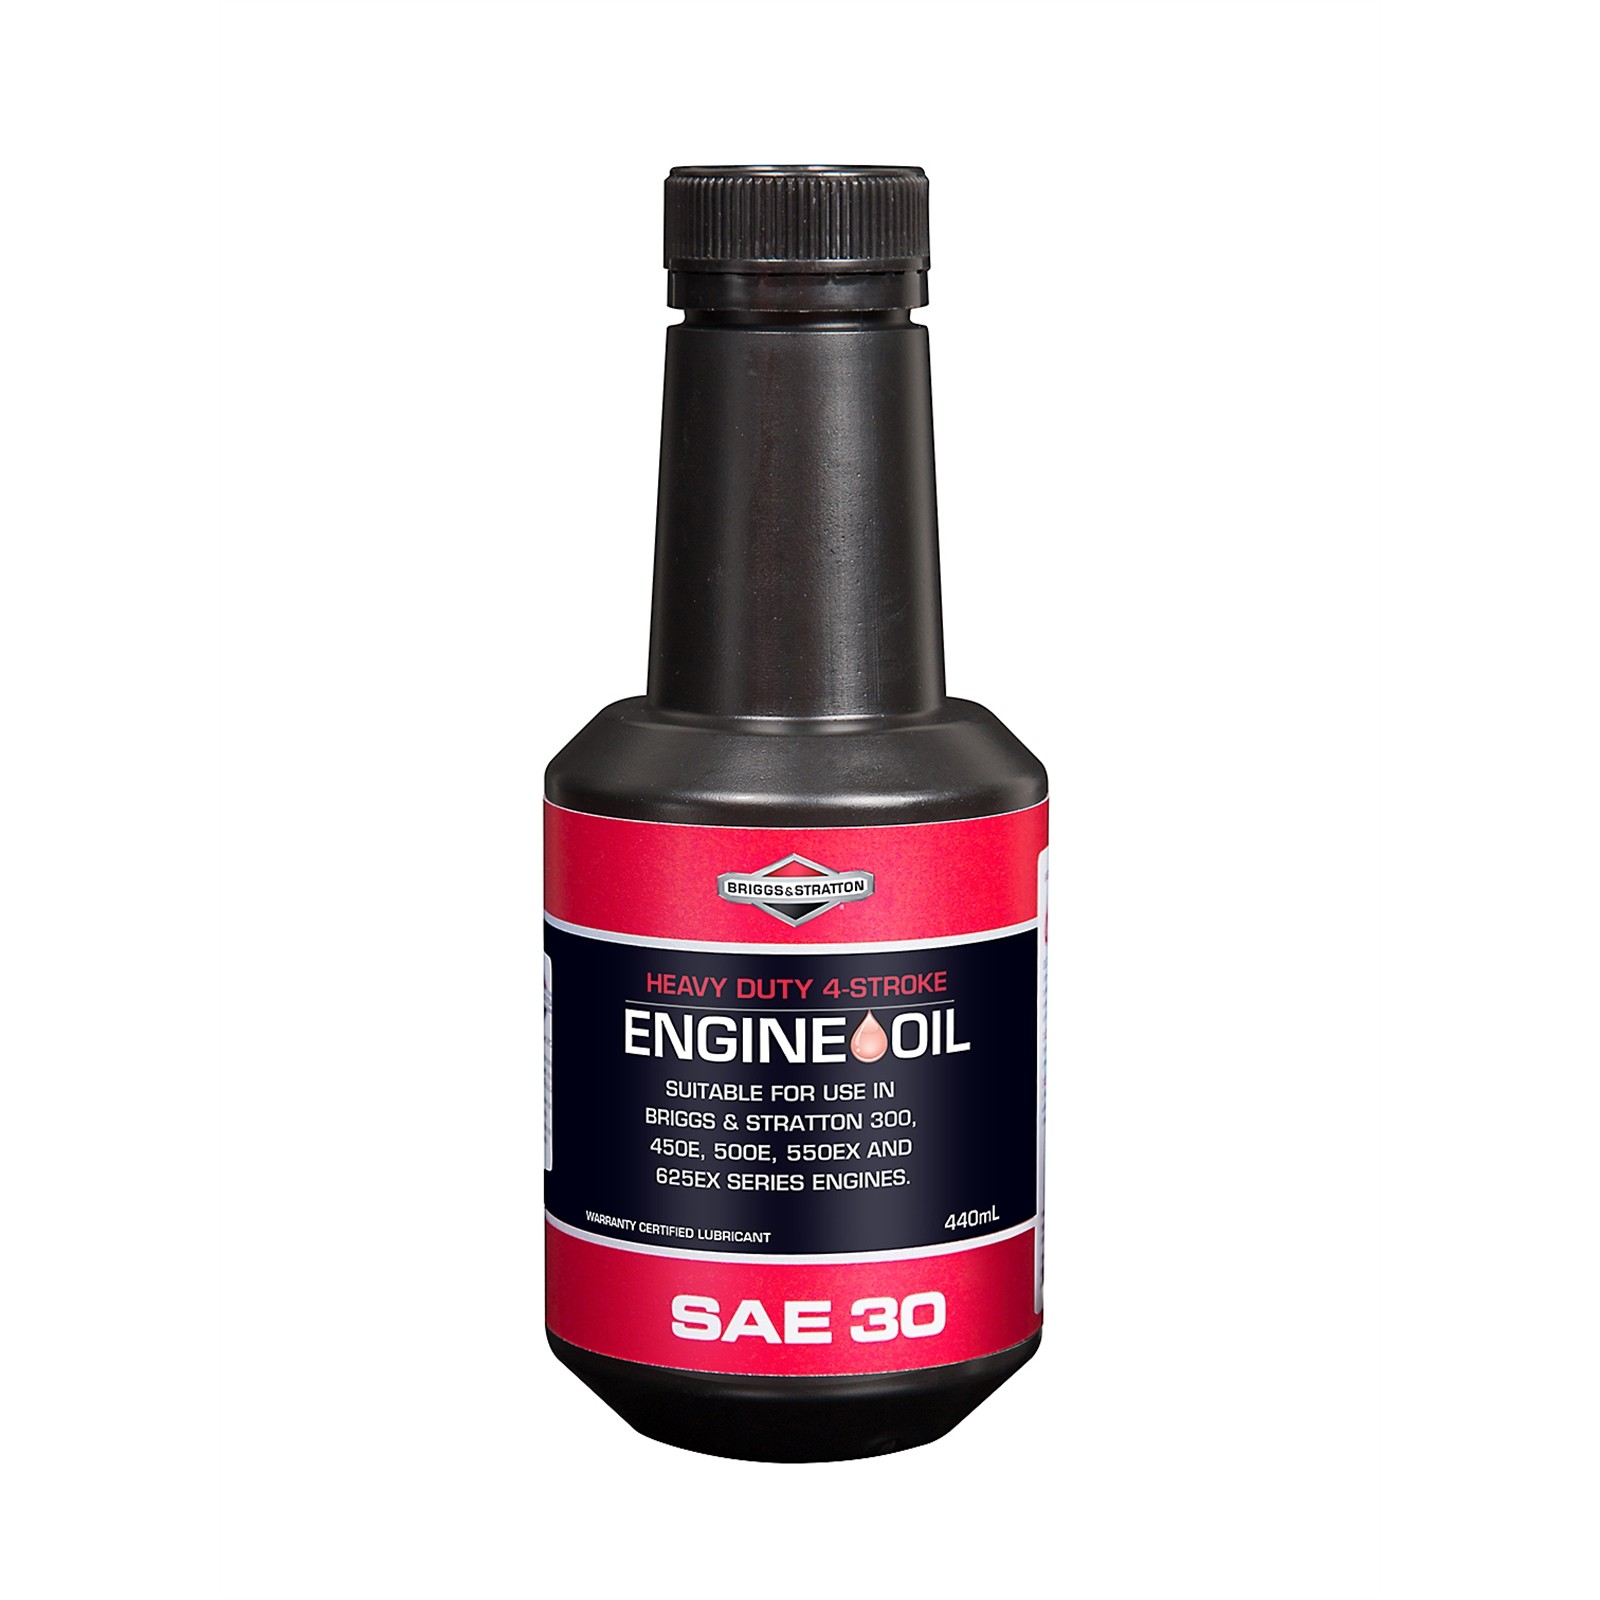 Engine oil 440ml